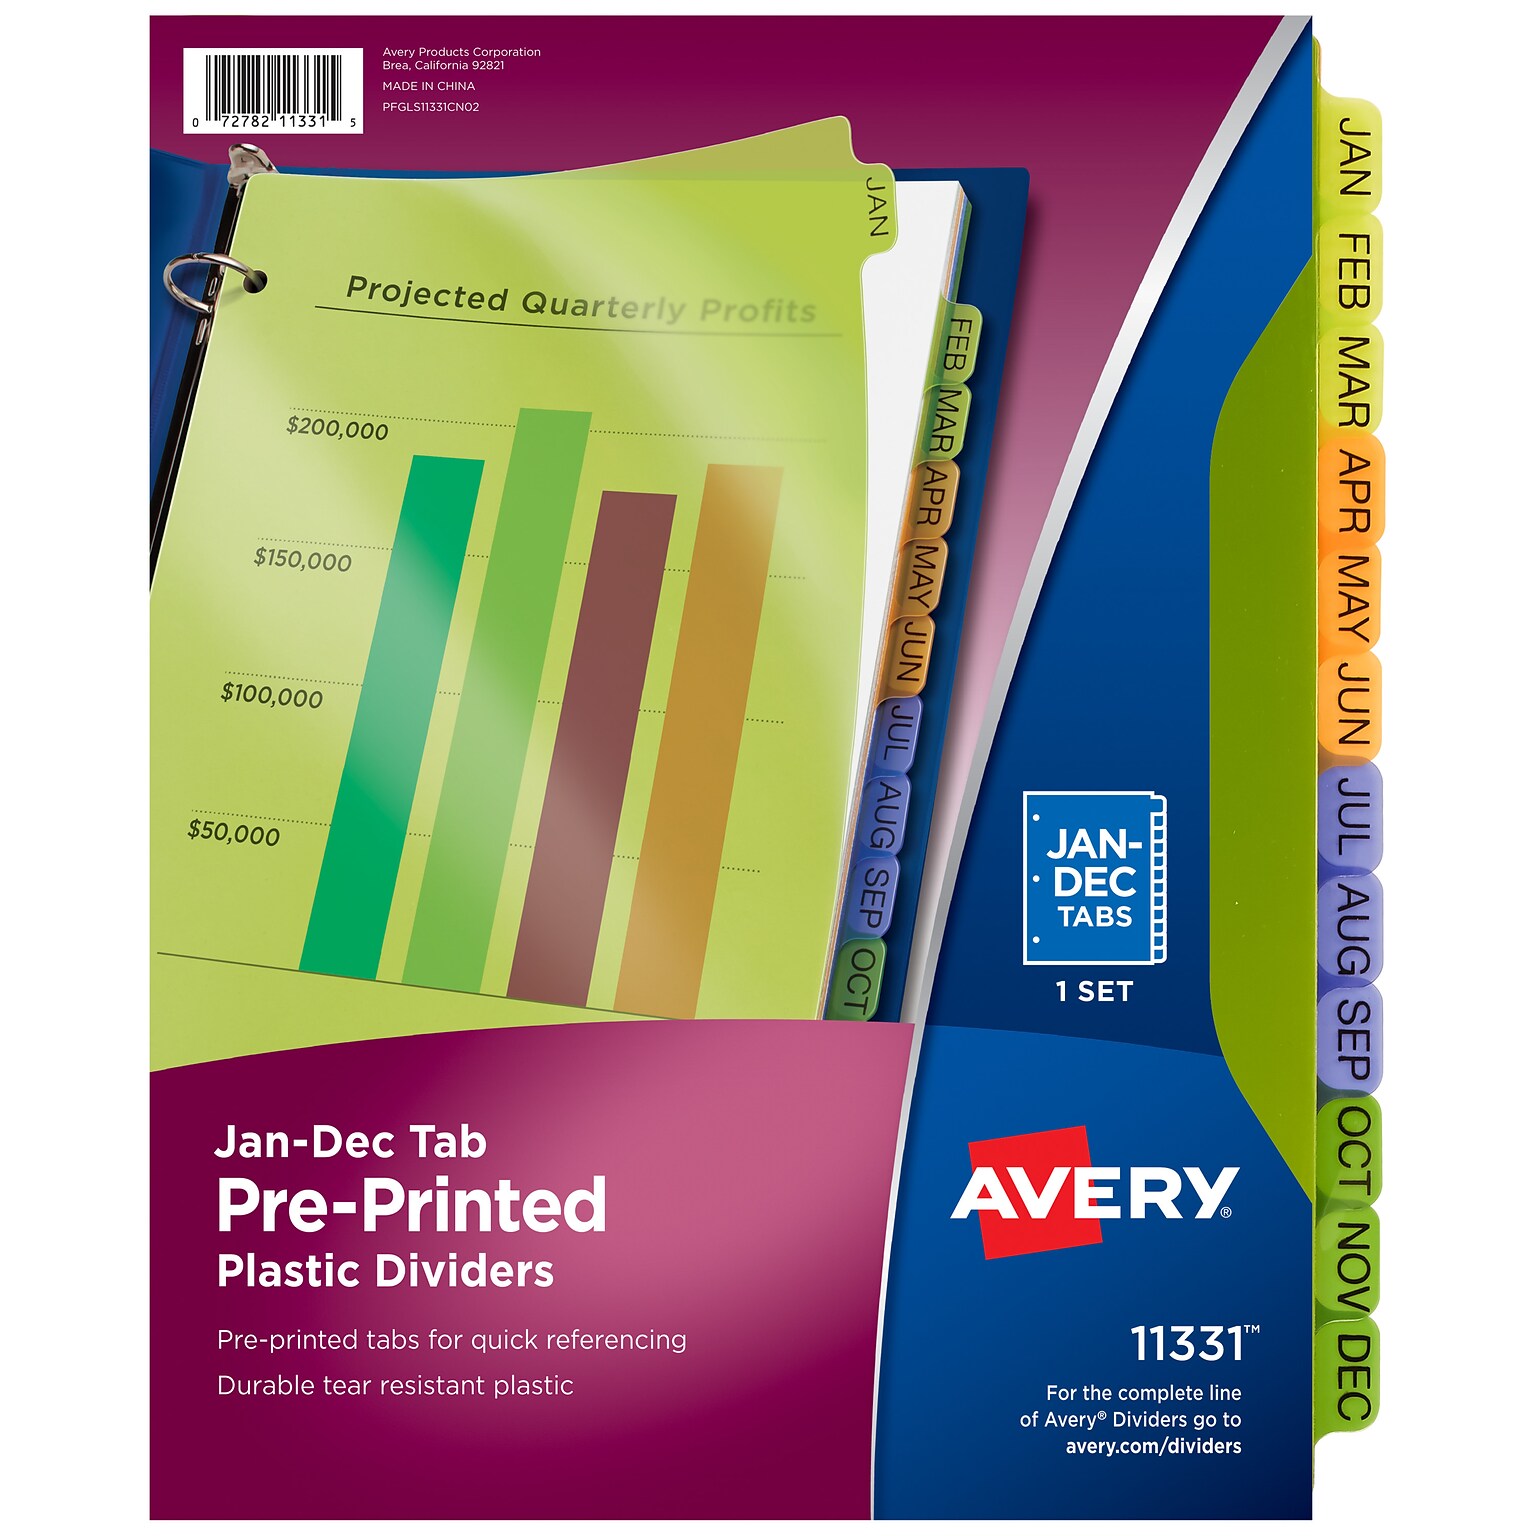 Avery Pre-Printed Plastic Dividers, Jan-Dec Tabs, Multicolor (11331)